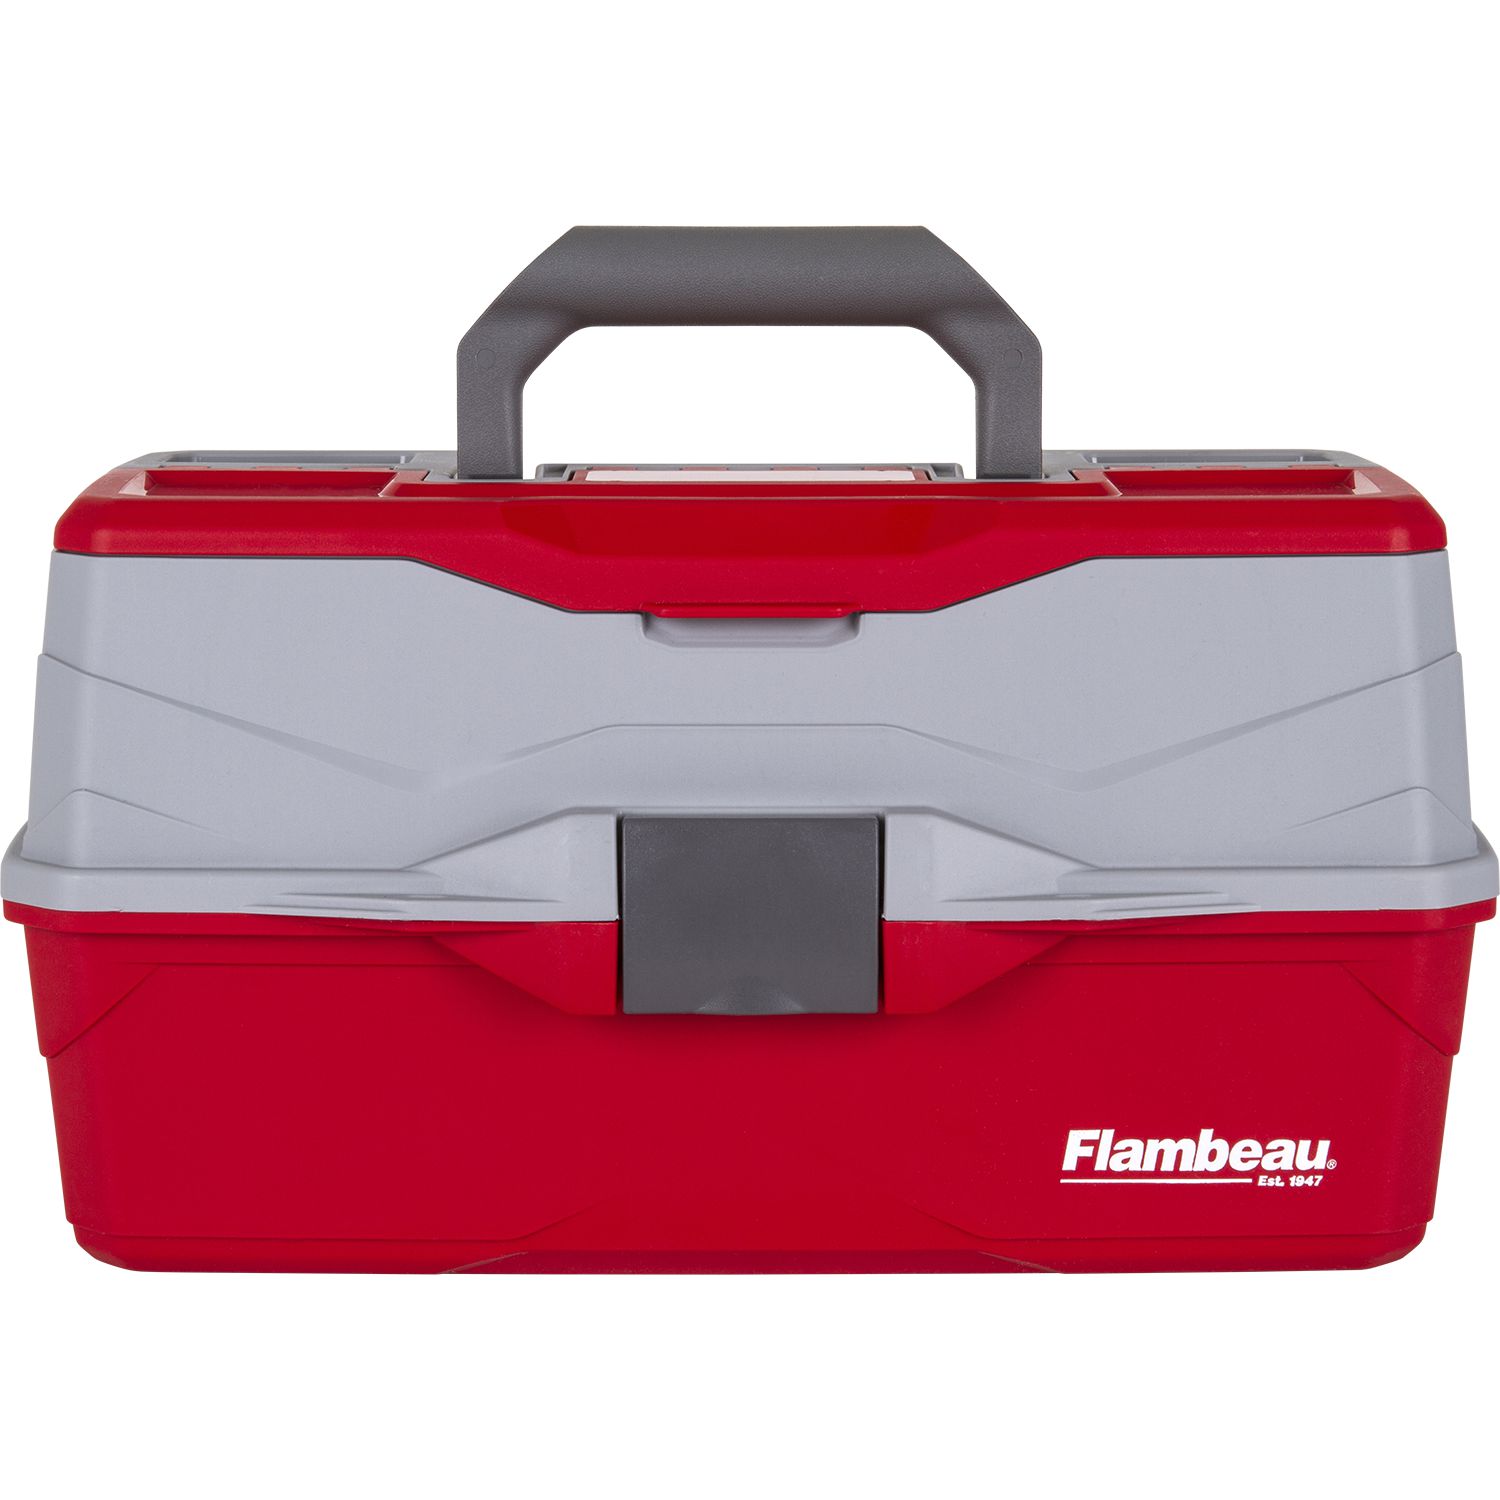 Flambeau Classic Viskoffer - Classic 3-Tray Red